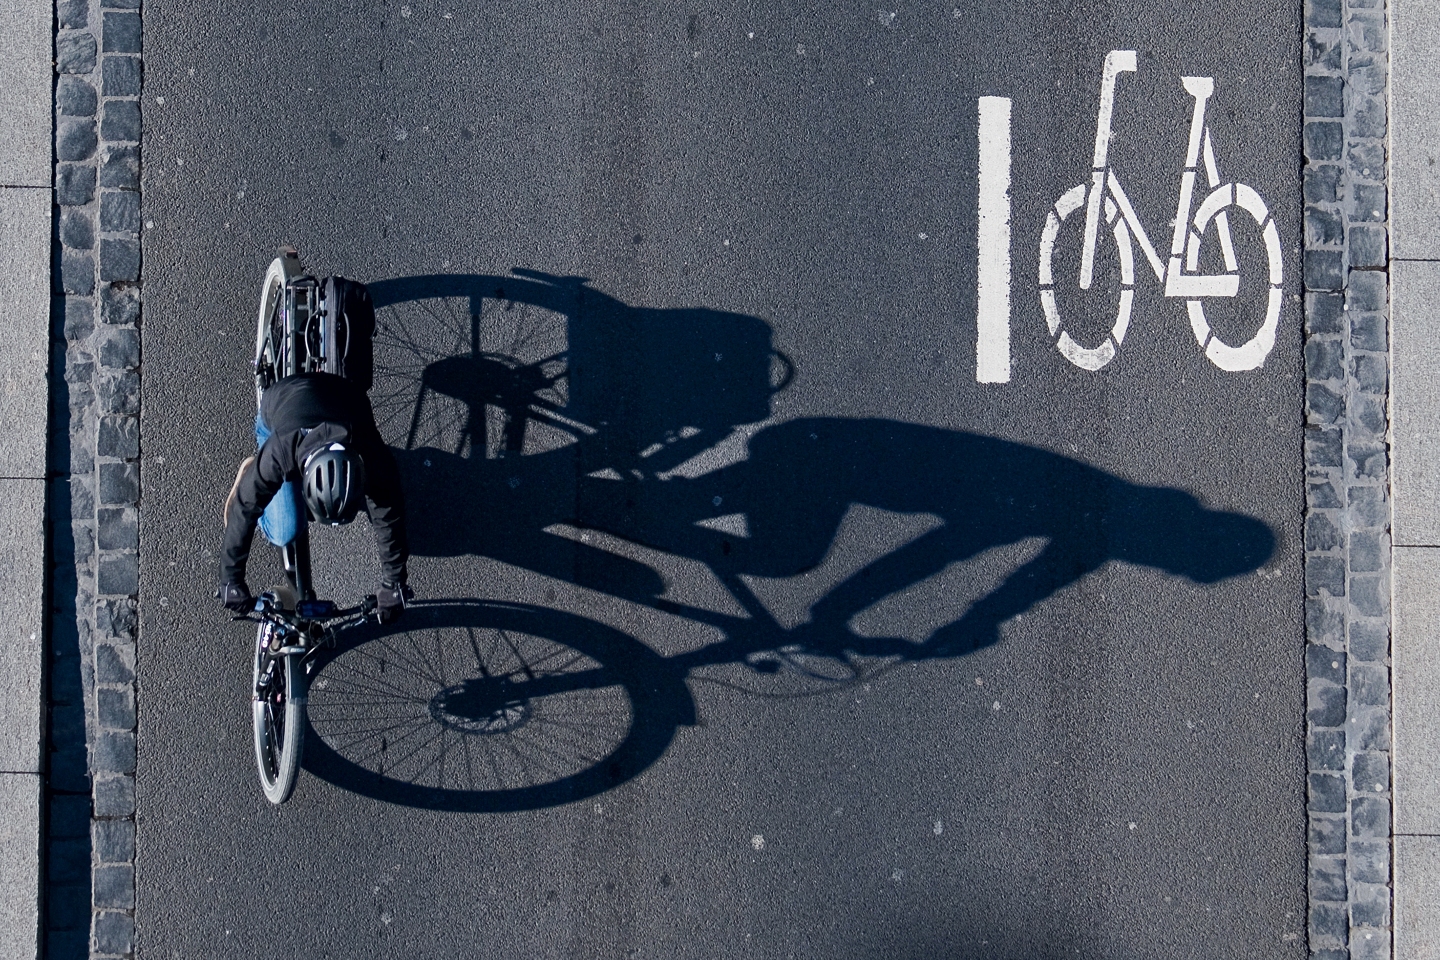 An e-bike cyclist rides a bike on a street.